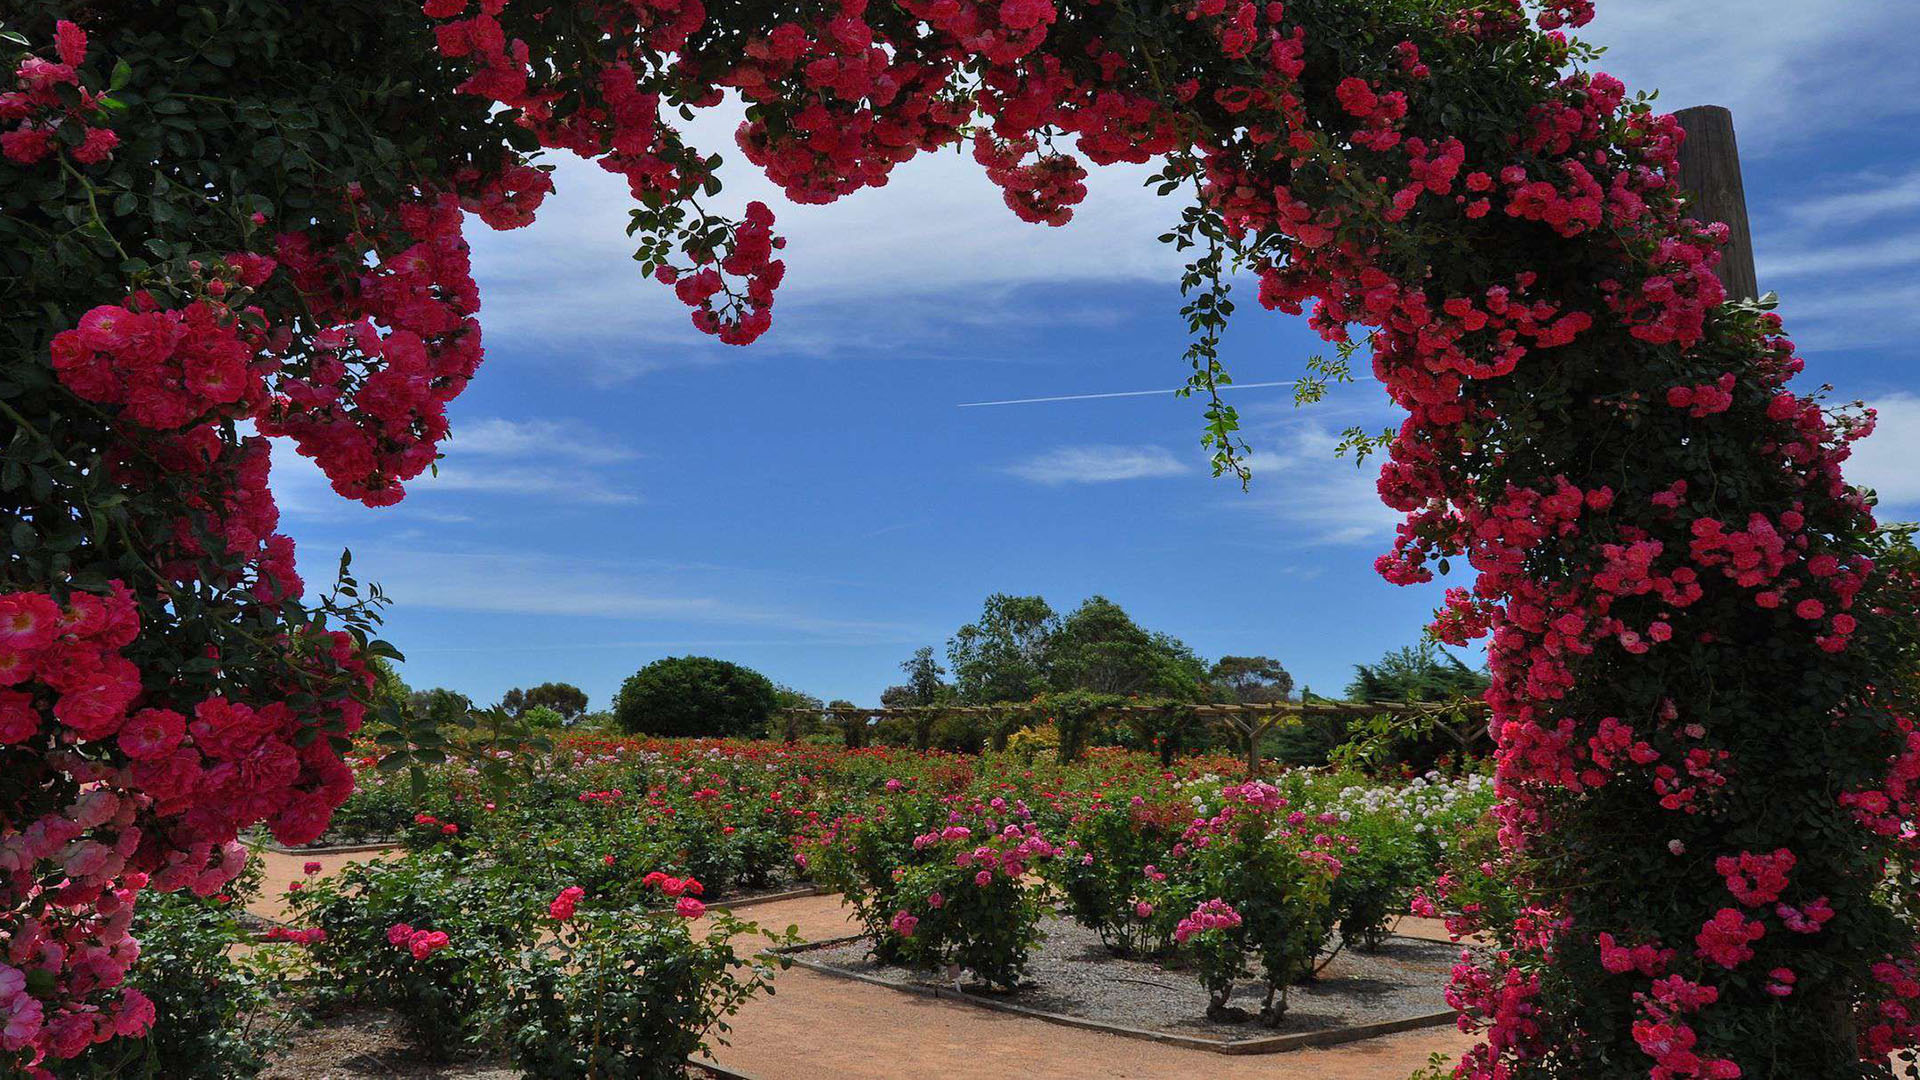 Australian Inland Botanic Gardens